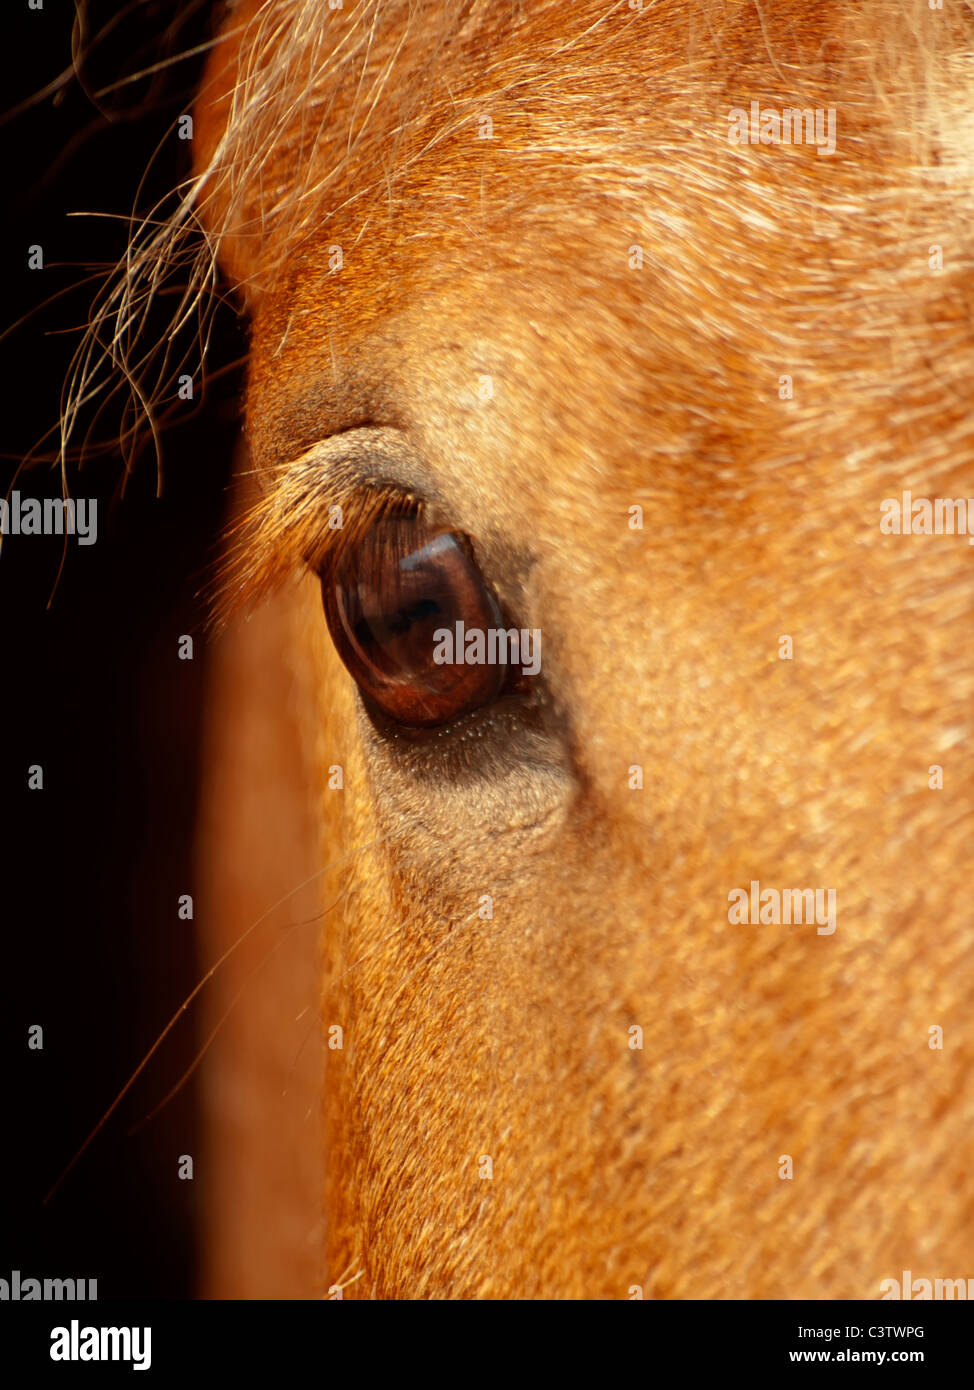 eye of palamino horse closeup Stock Photo